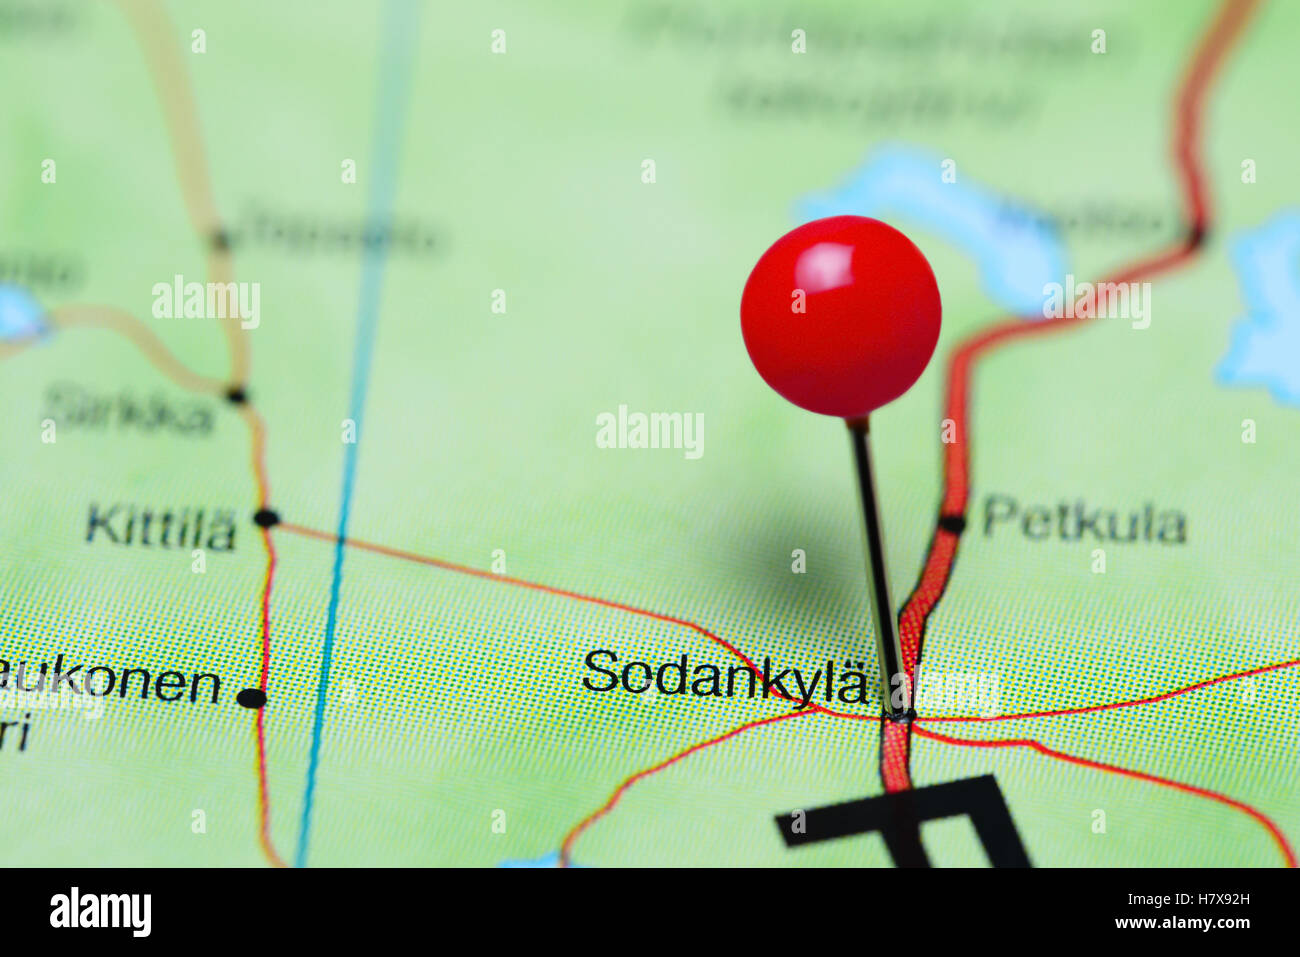 Sodankyla pinned on a map of Finland Stock Photo